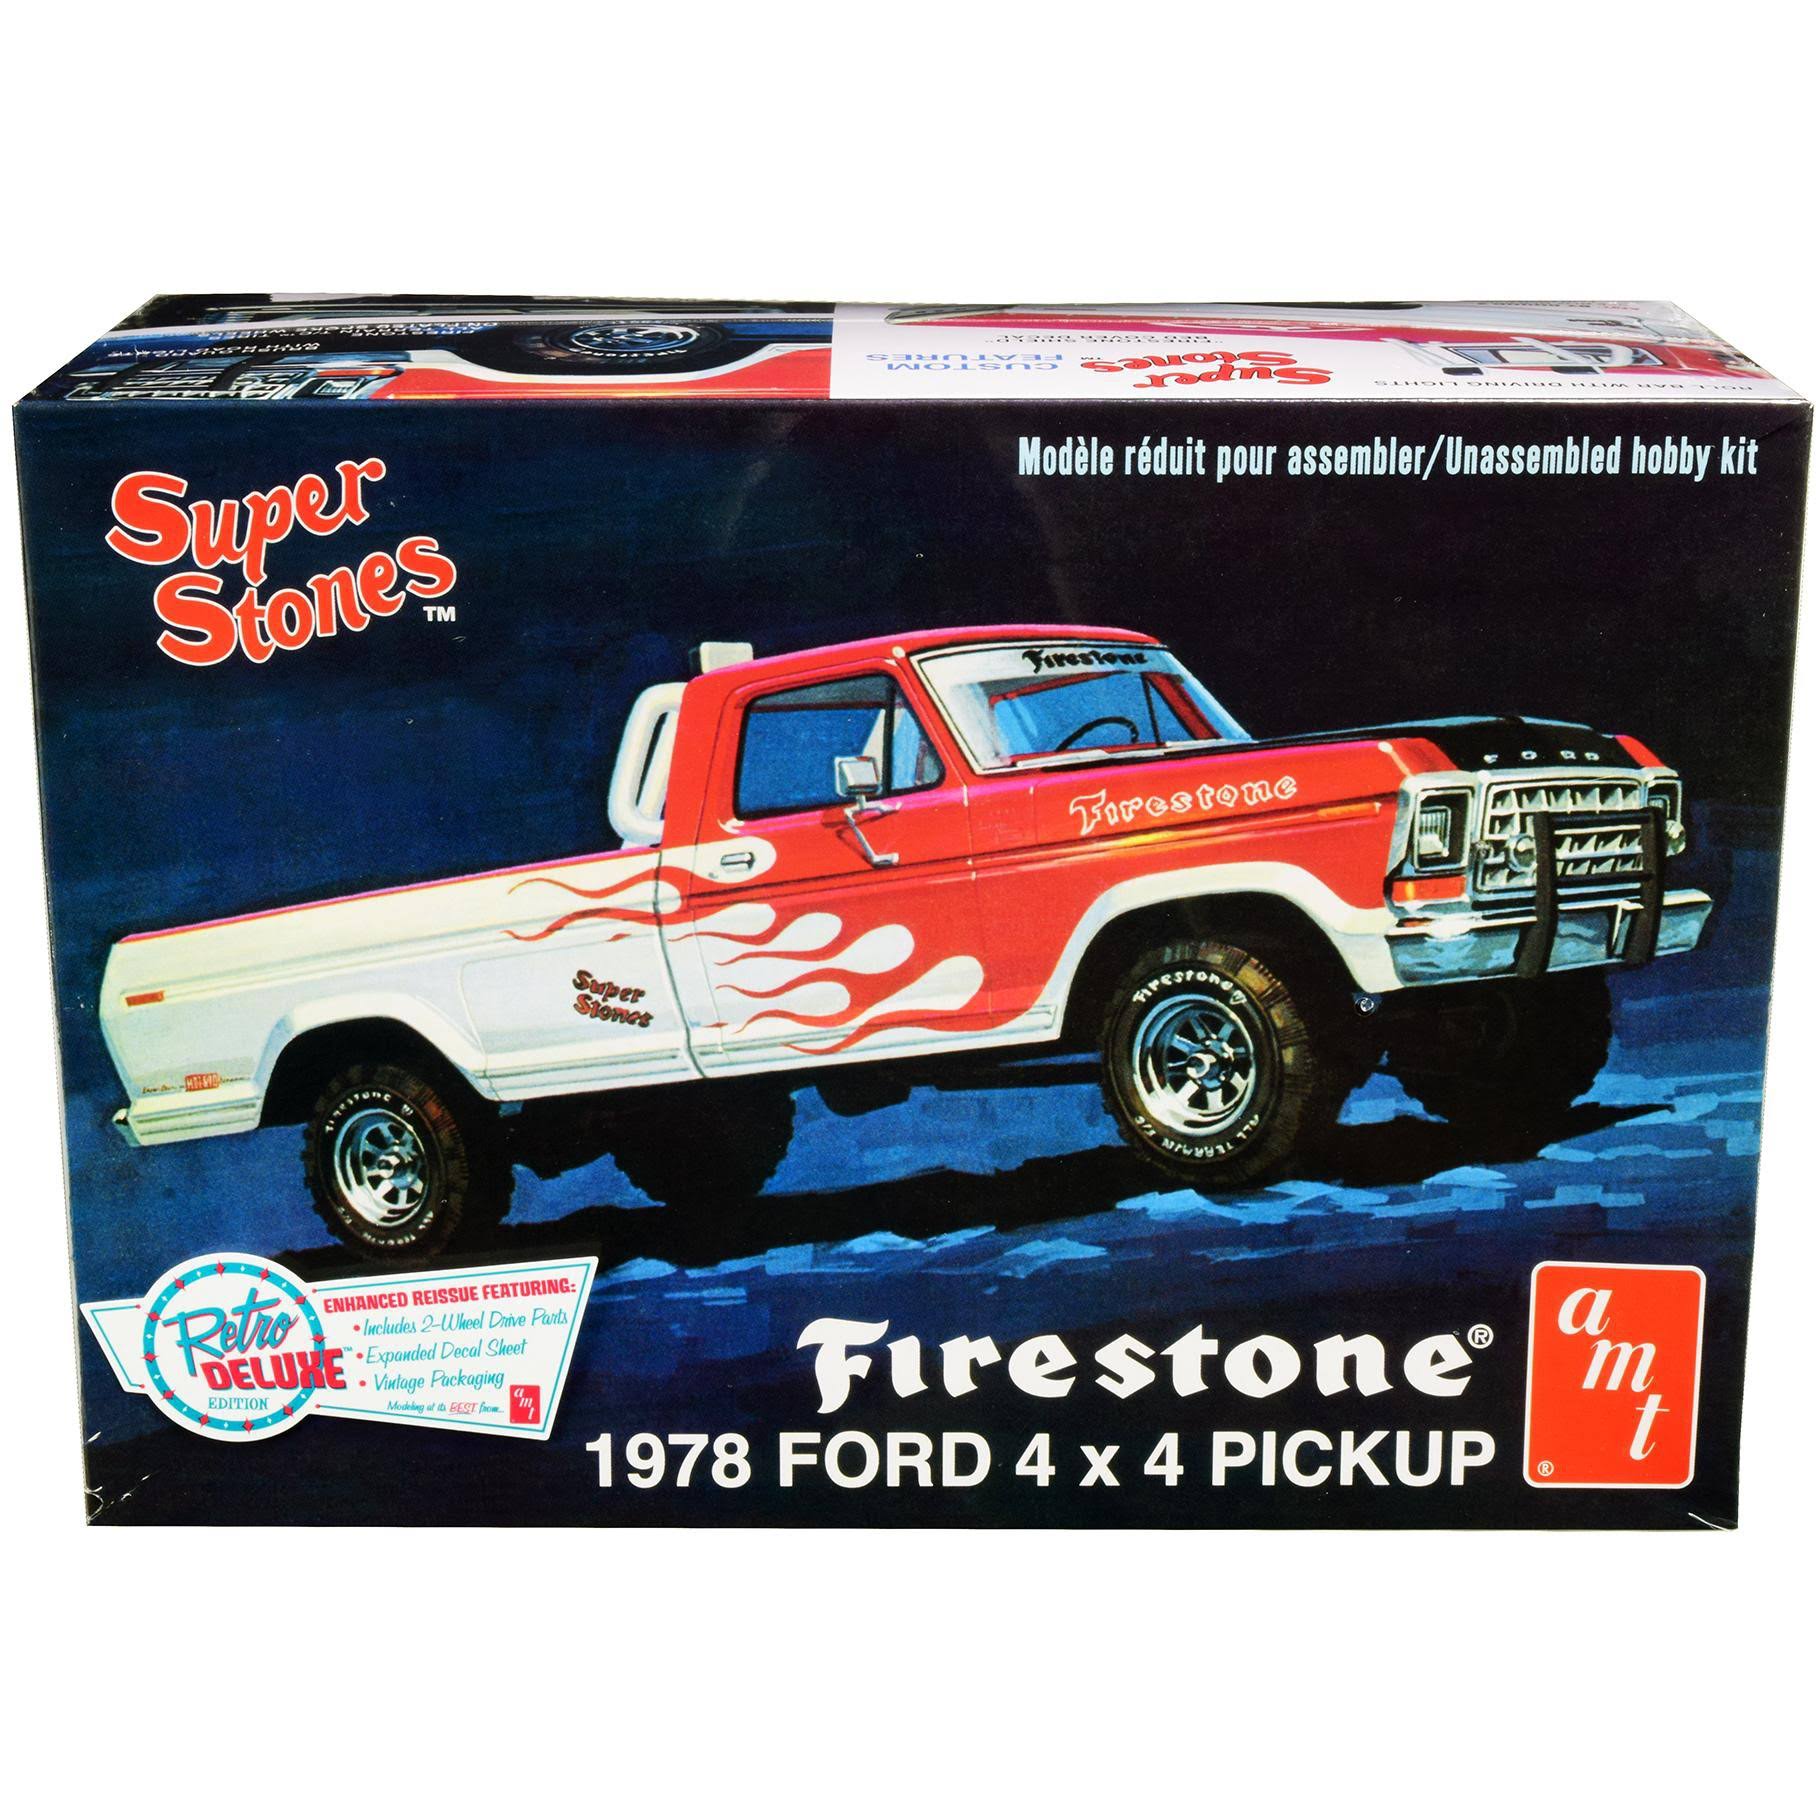 AMT 1978 Ford Pickup Firestone Super Stones 1/25 Model Kit